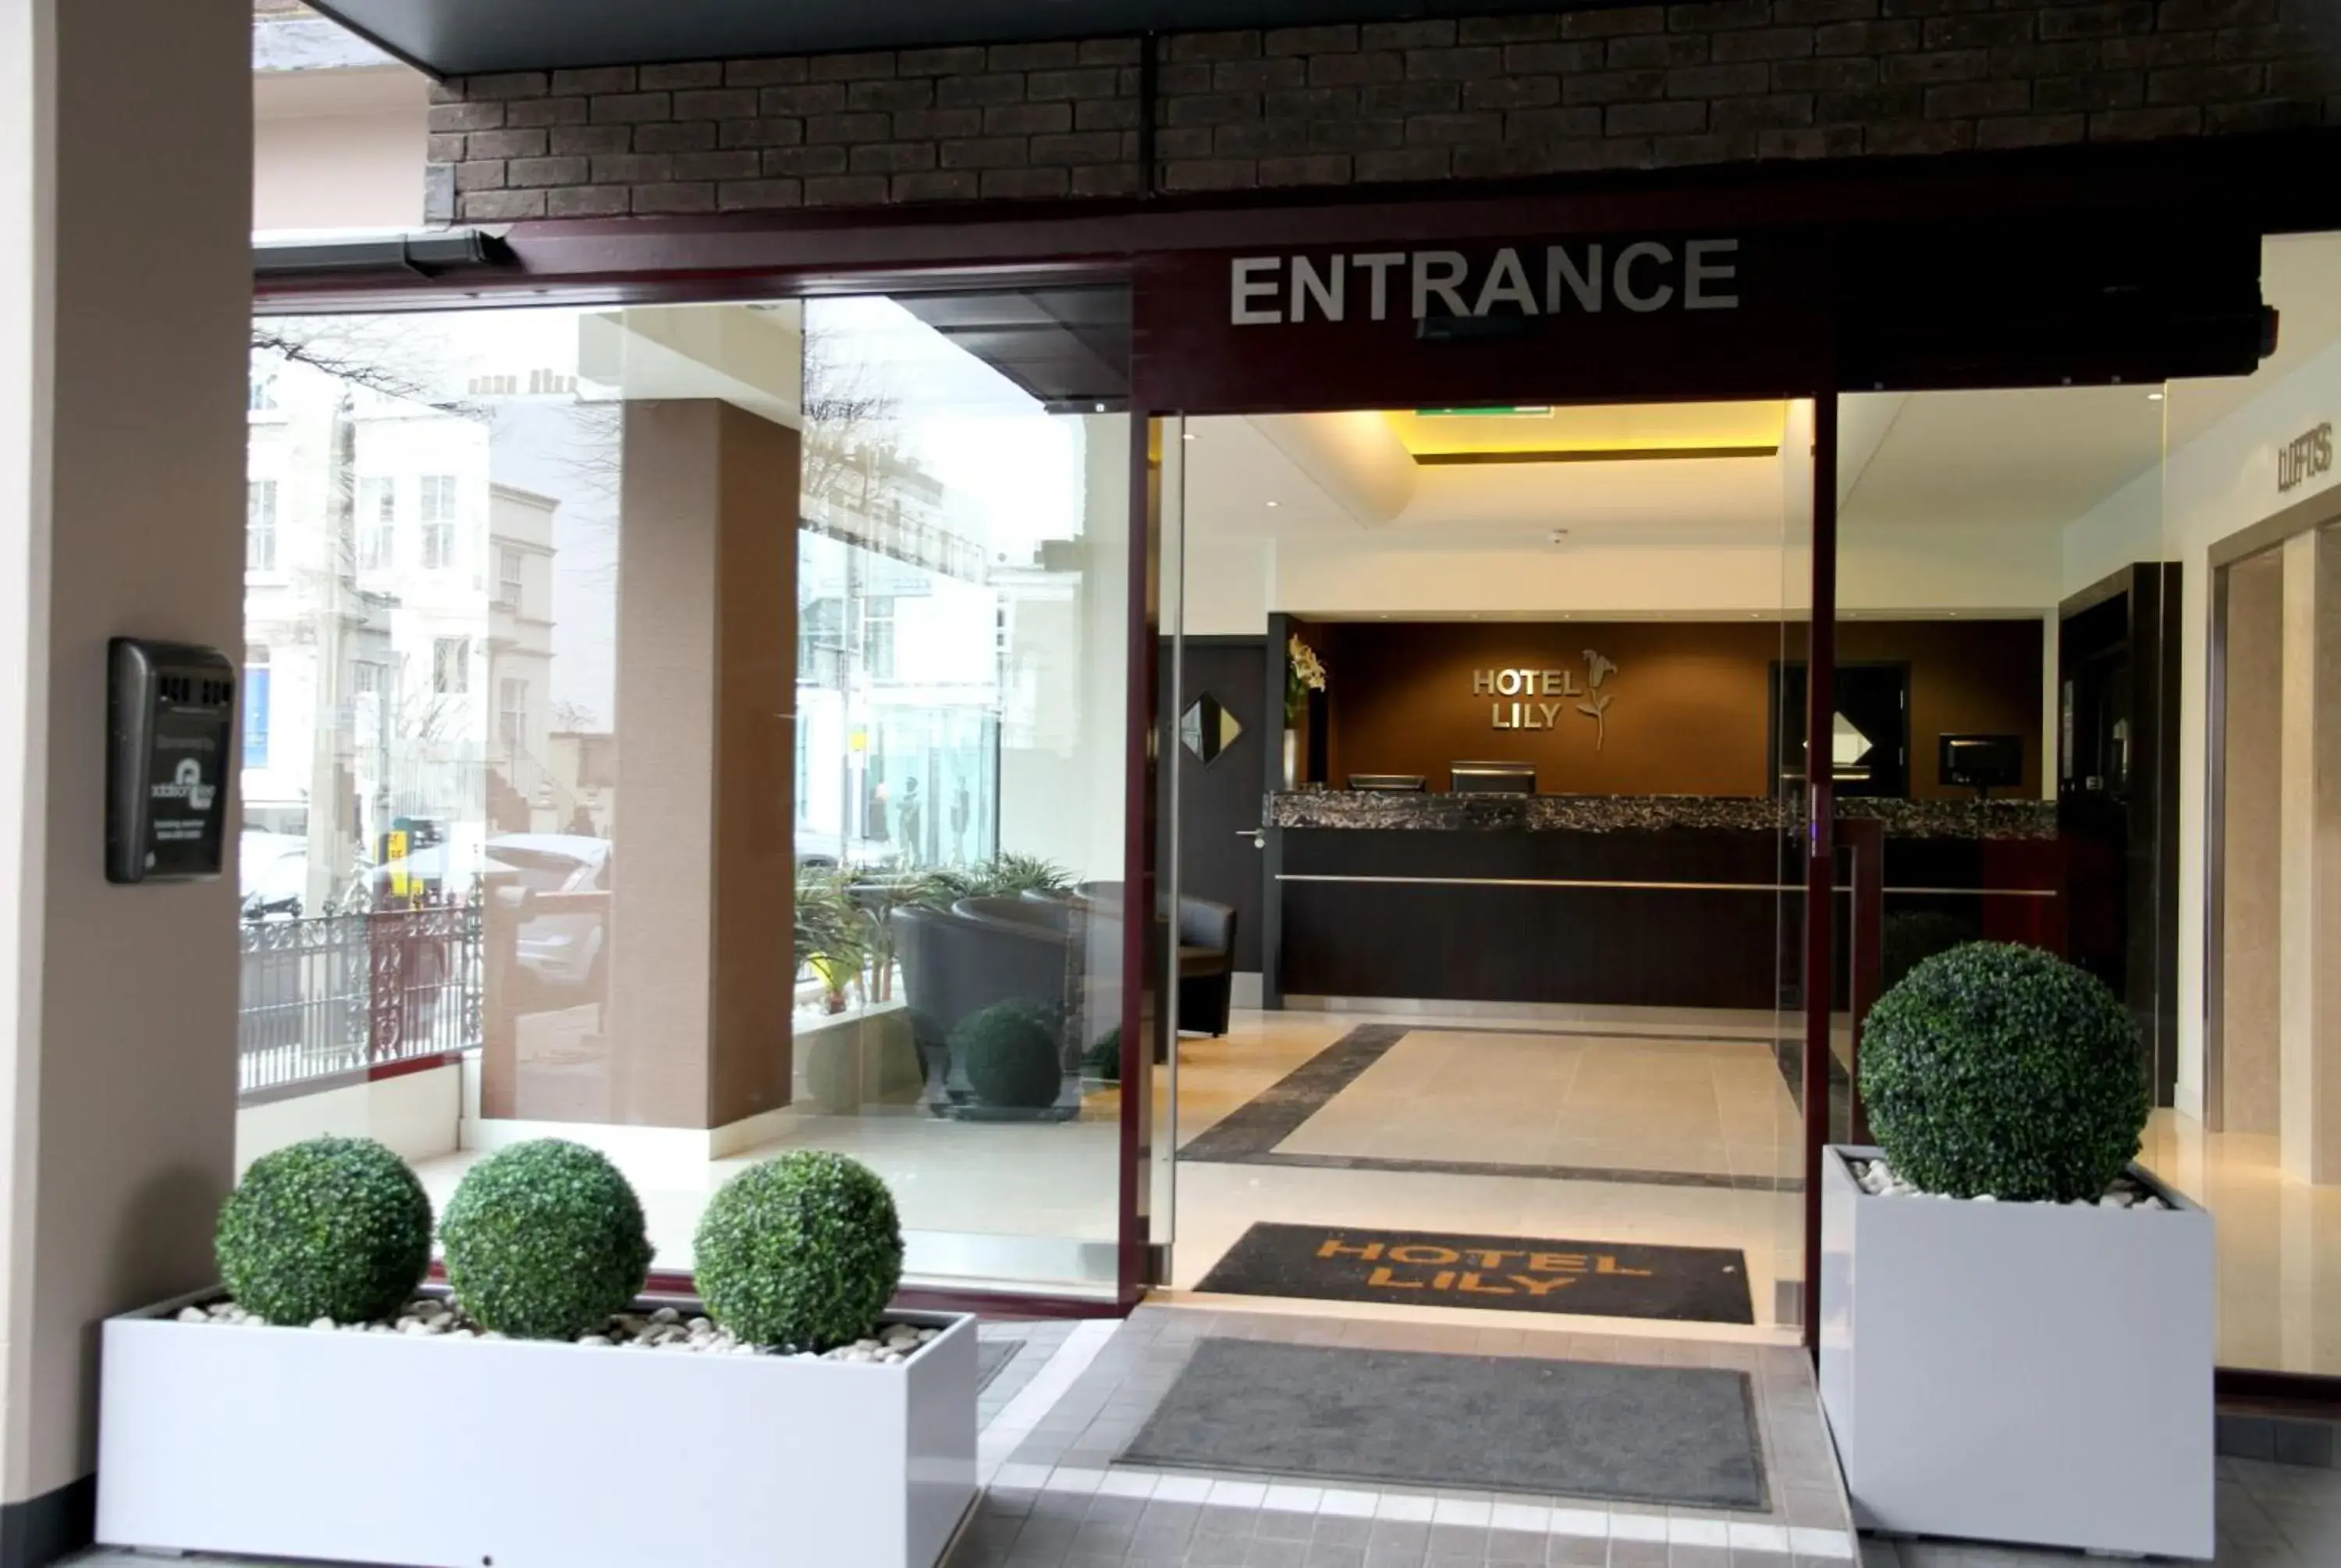 Facade/entrance in Hotel Lily